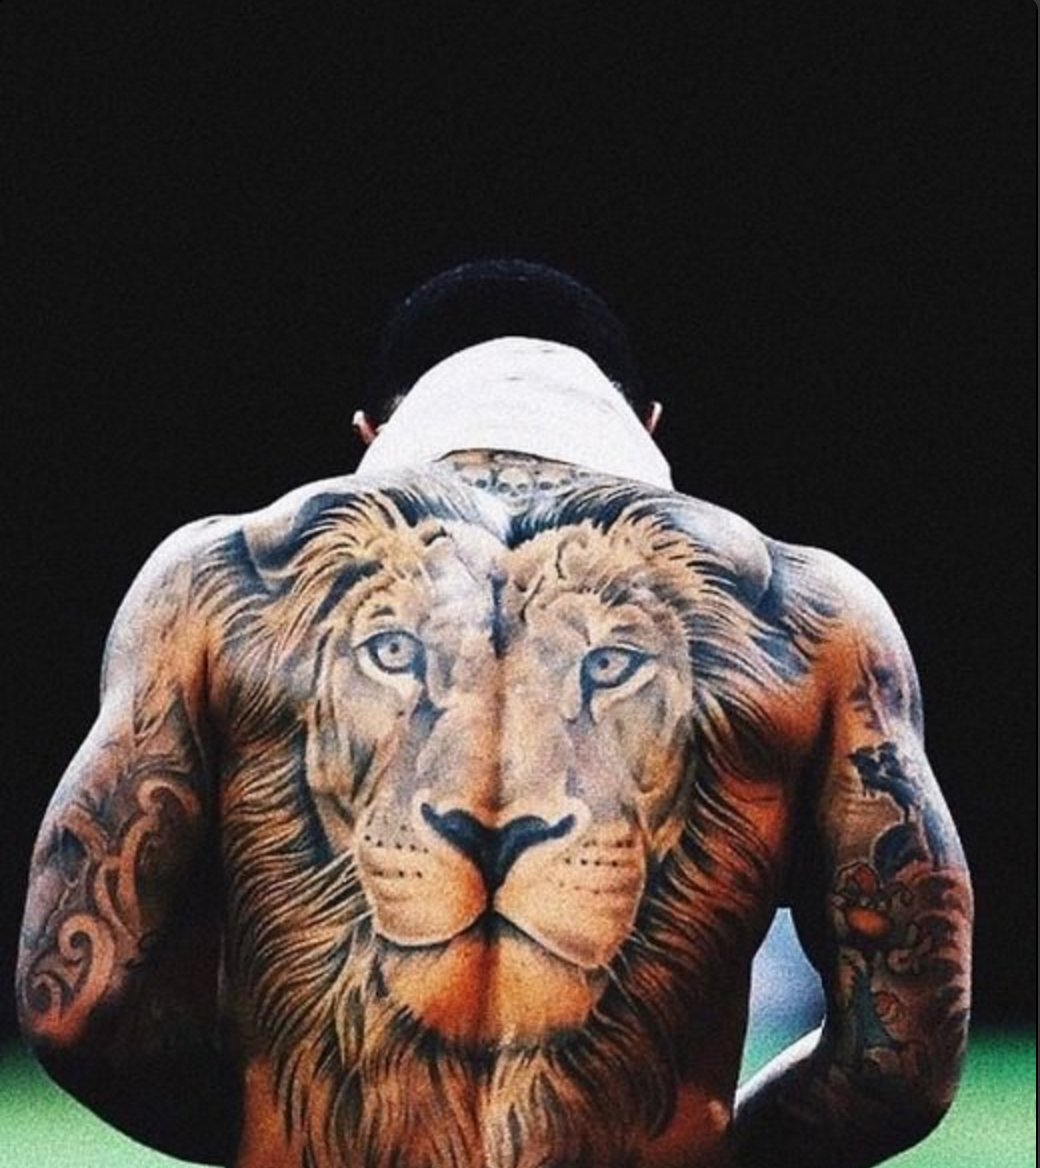 Footy Accumulators on Twitter: "Memphis Depay's tattoo is class! 💉💉…